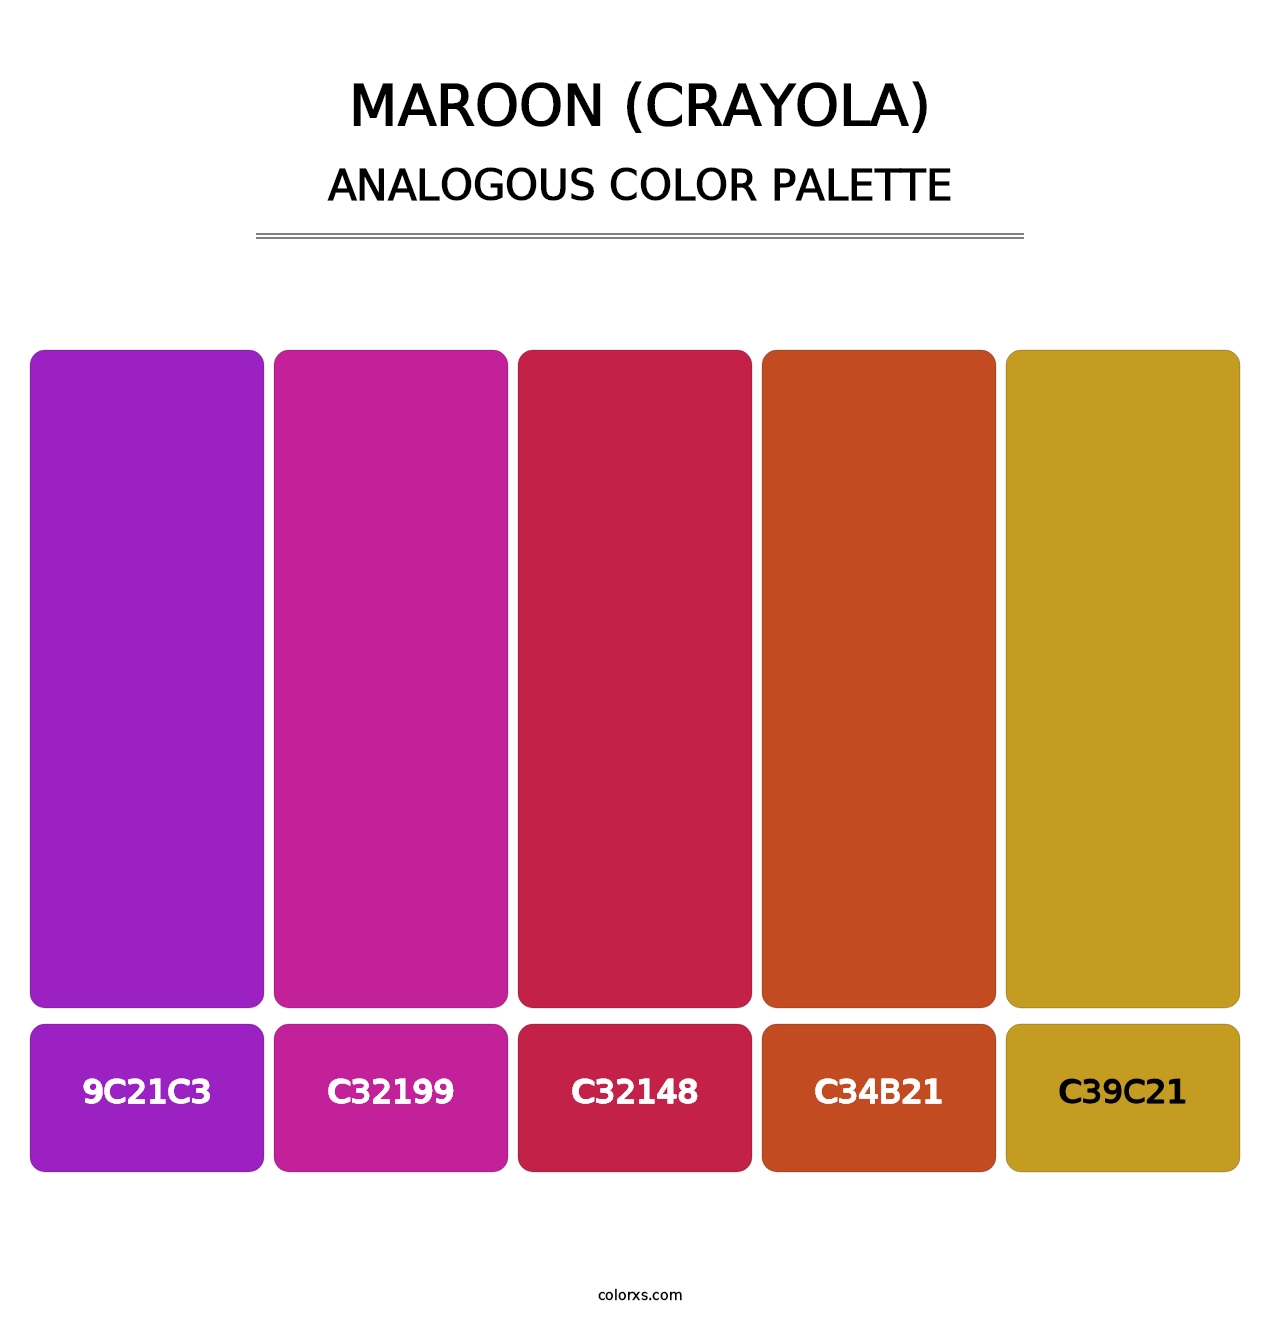 Maroon (Crayola) - Analogous Color Palette